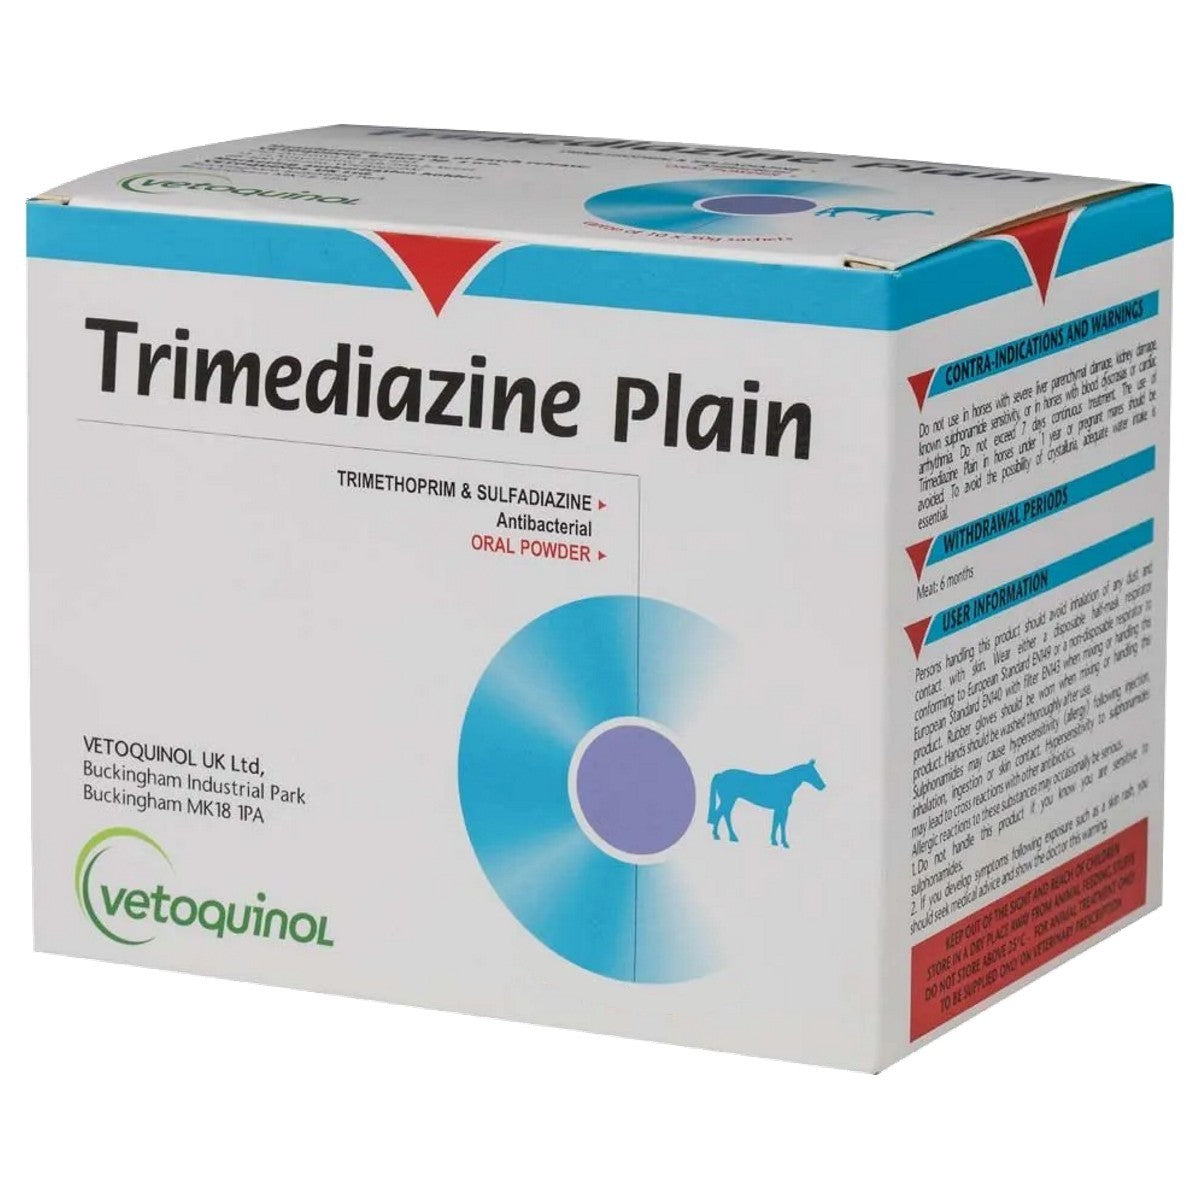 Trimediazine Plain 10 sachets